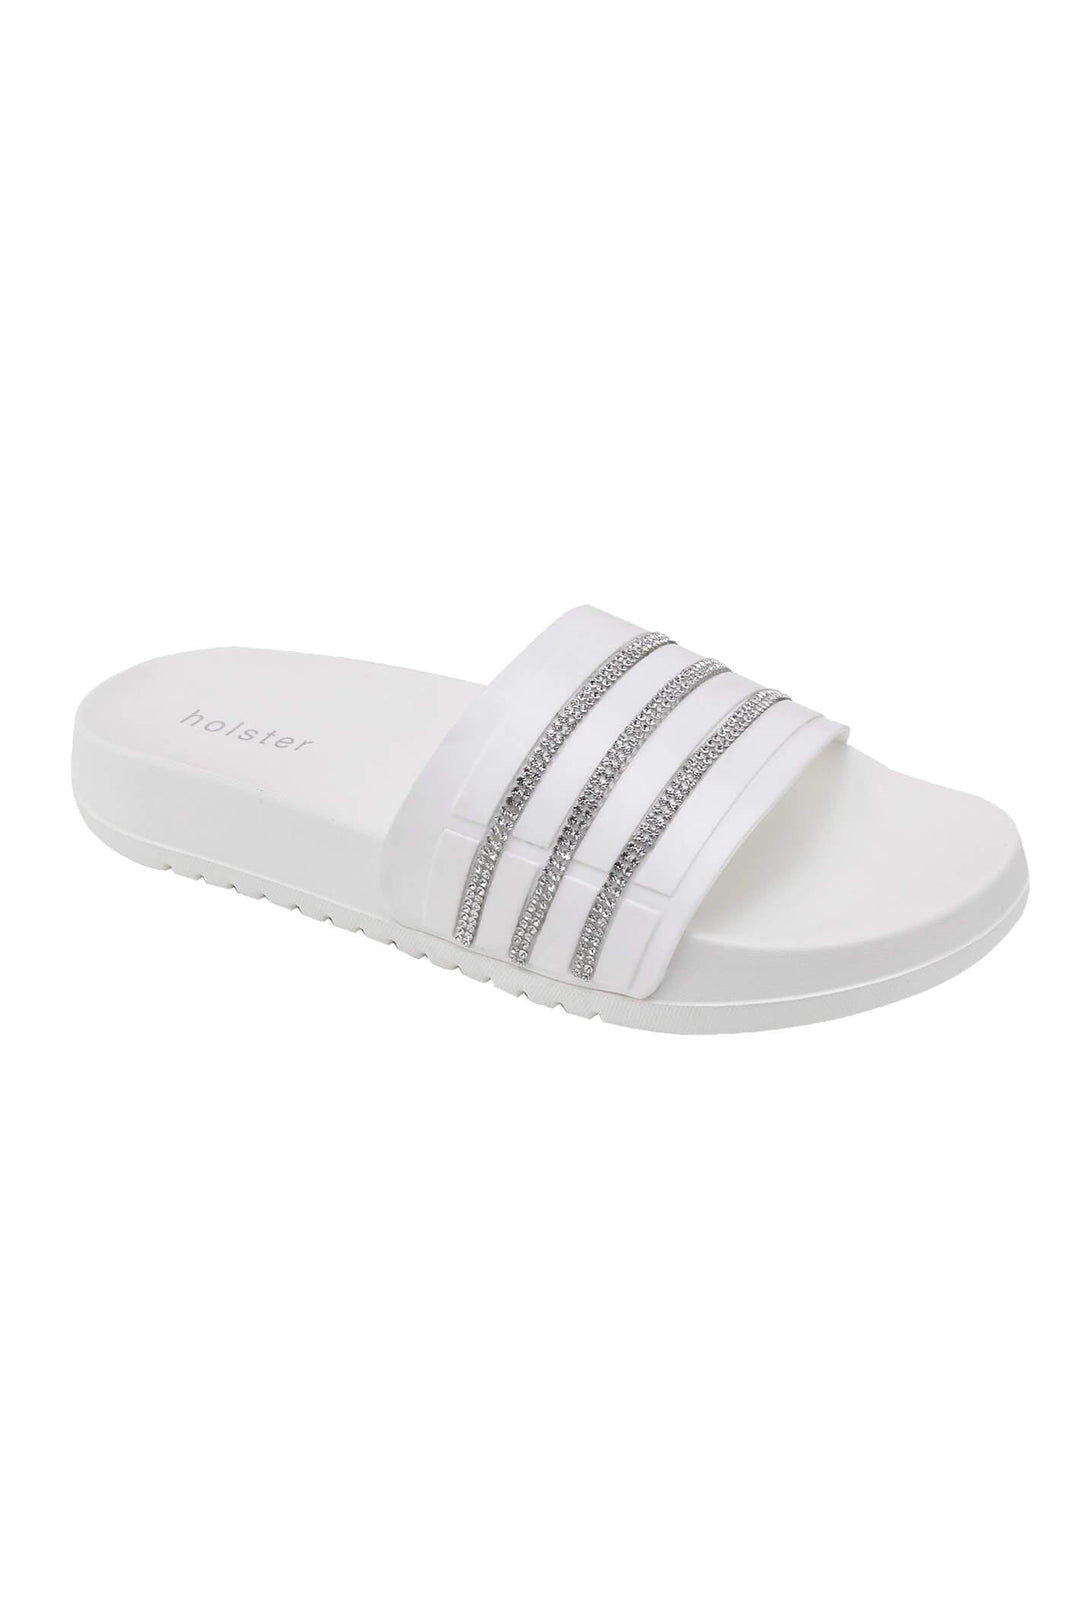 Holster White Cruz Slider Sandals